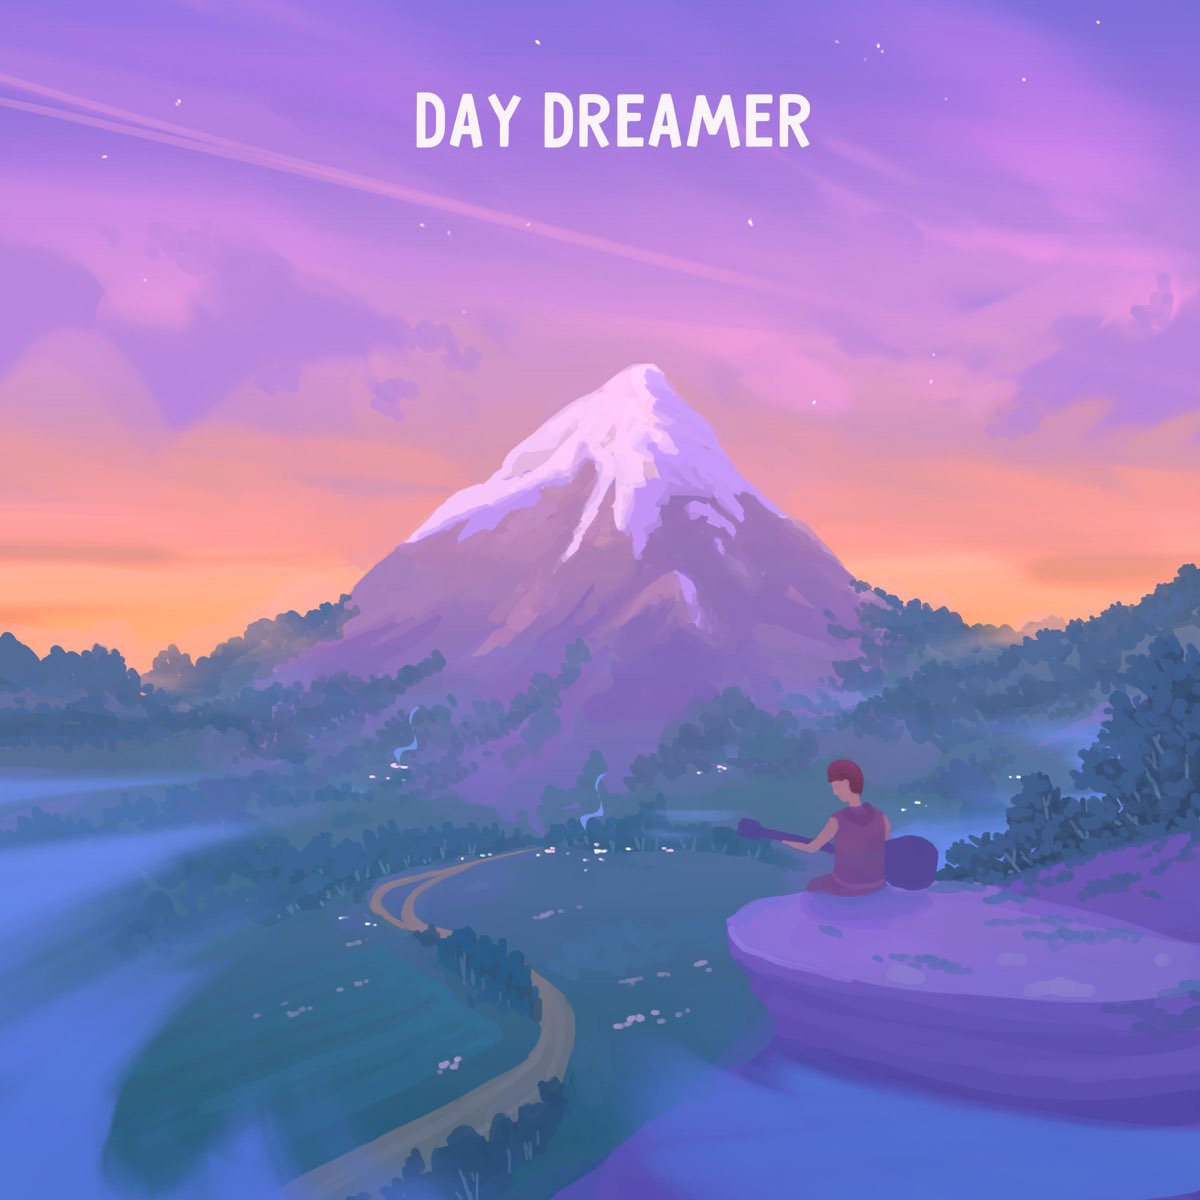 Day dreamer. Daydreamer tumblr.